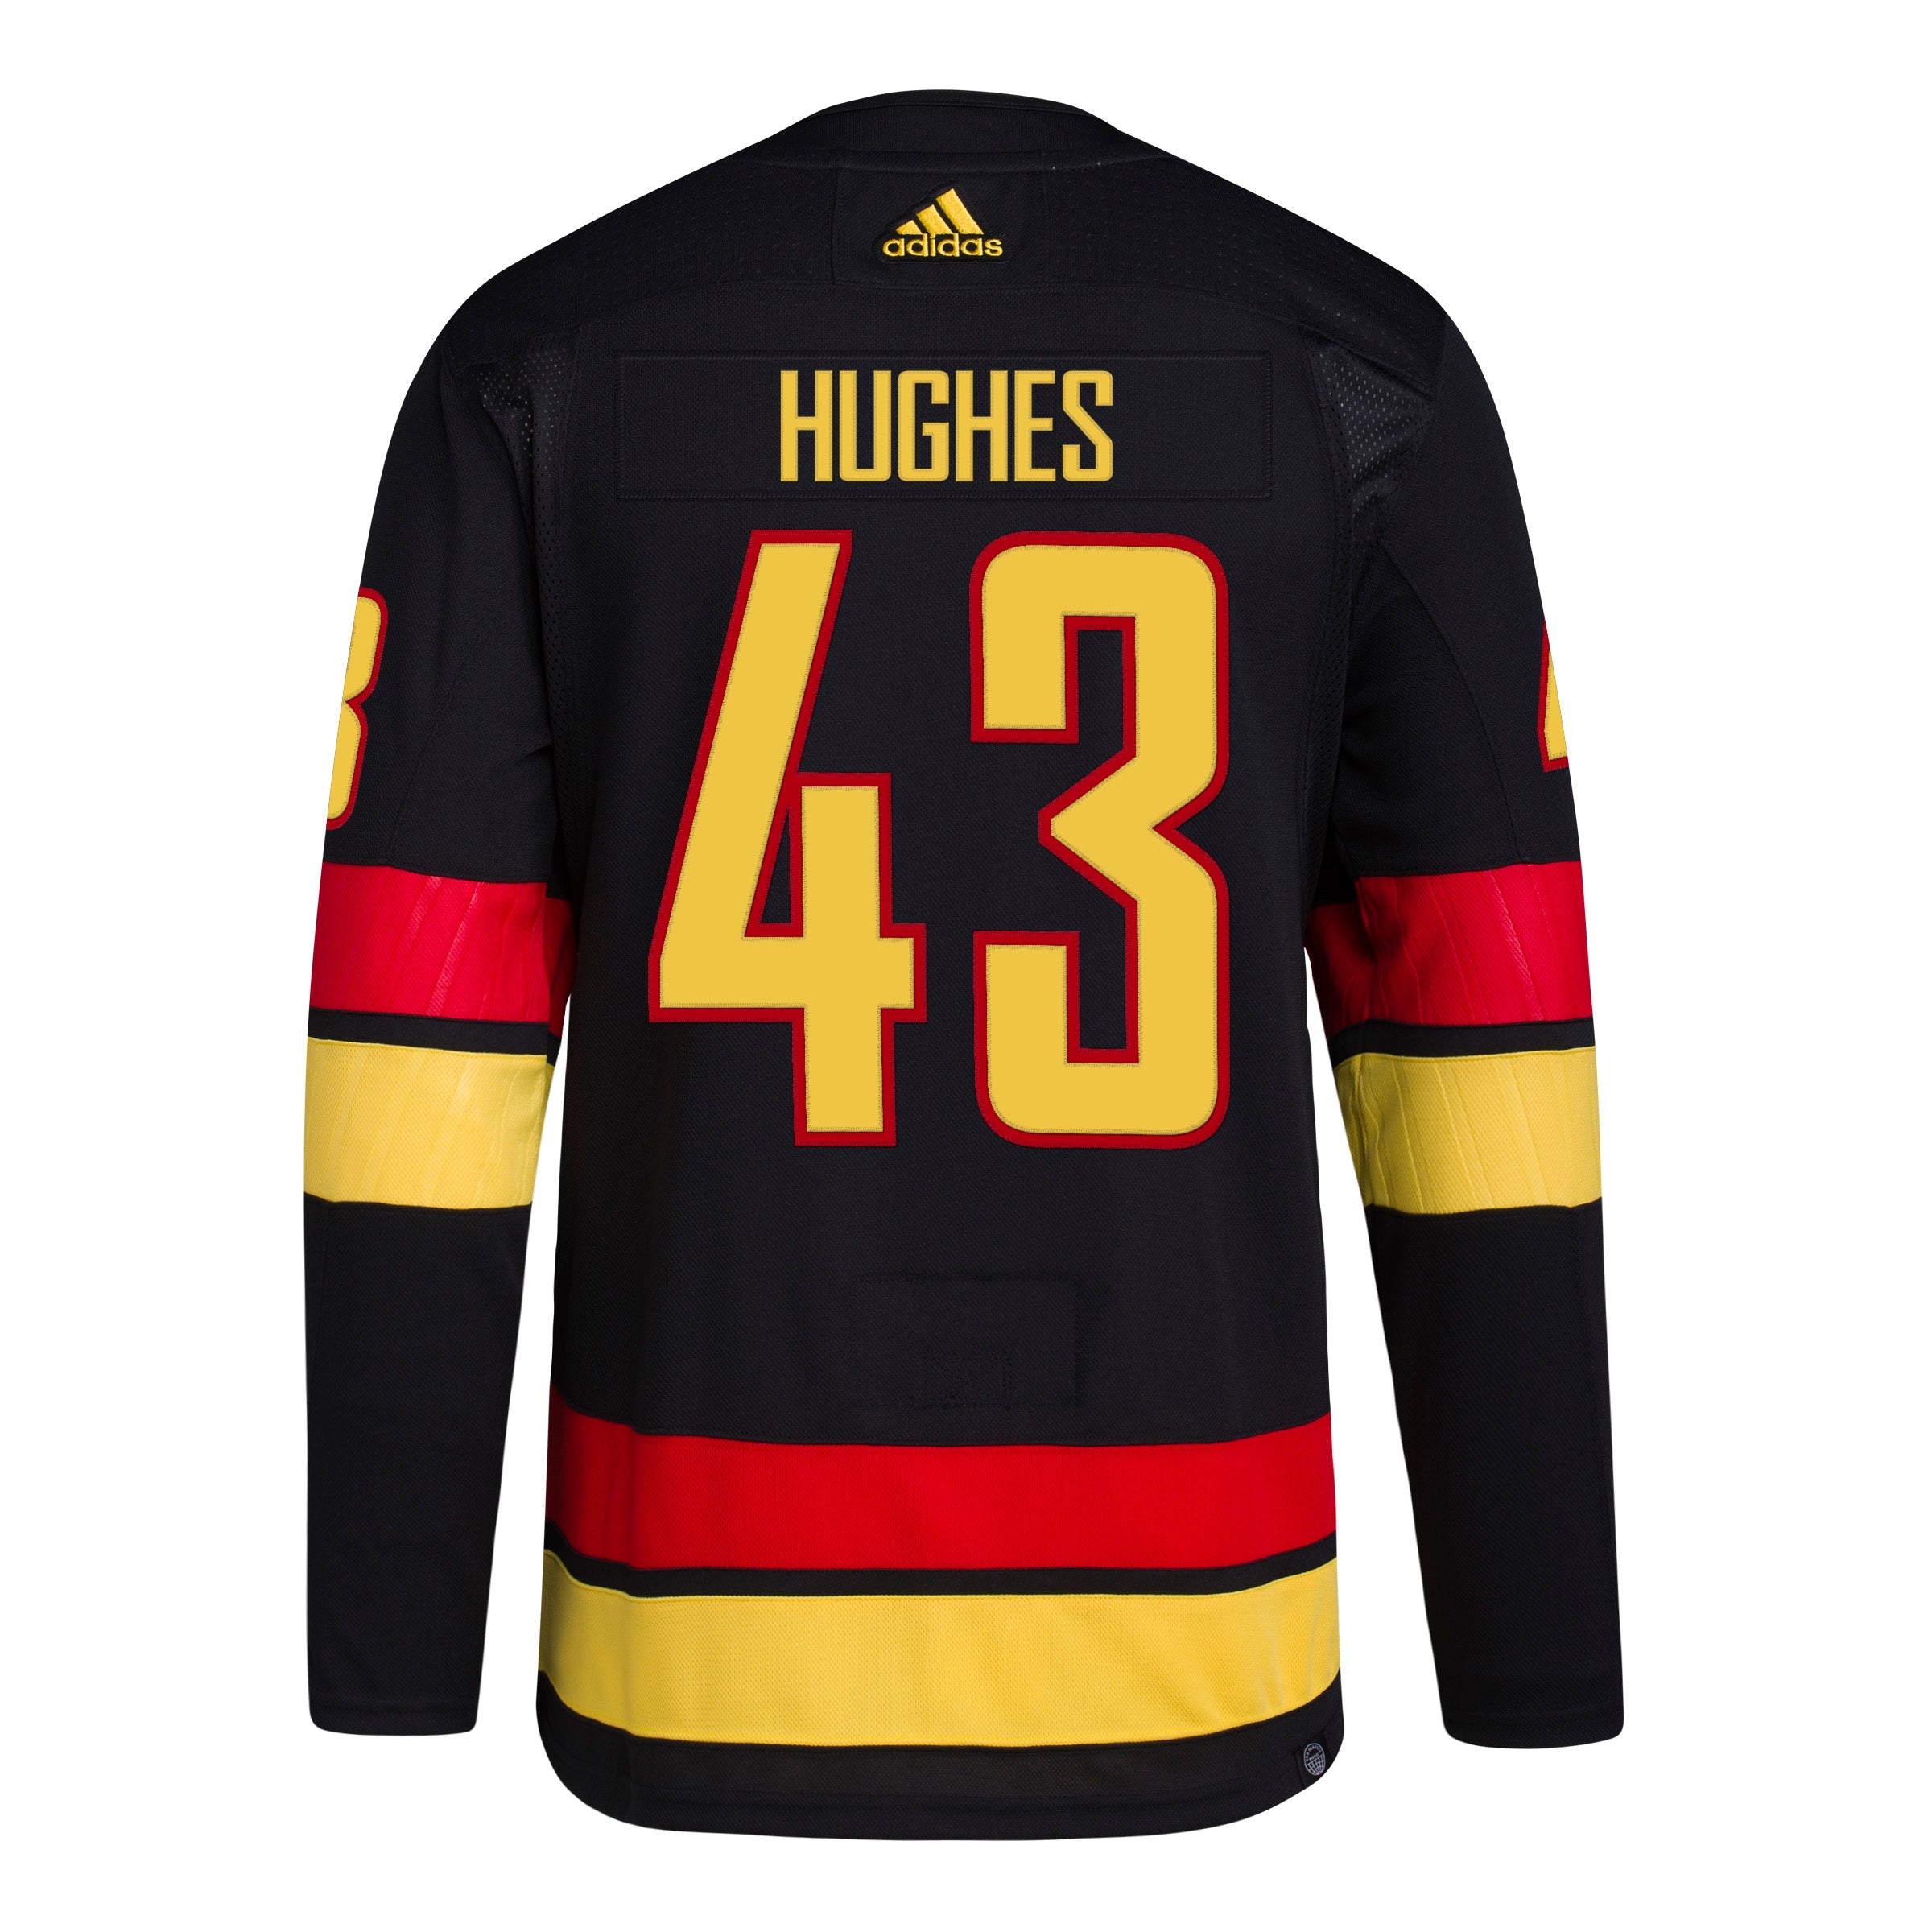 New Vancouver Canucks QUINN HUGHES jersey